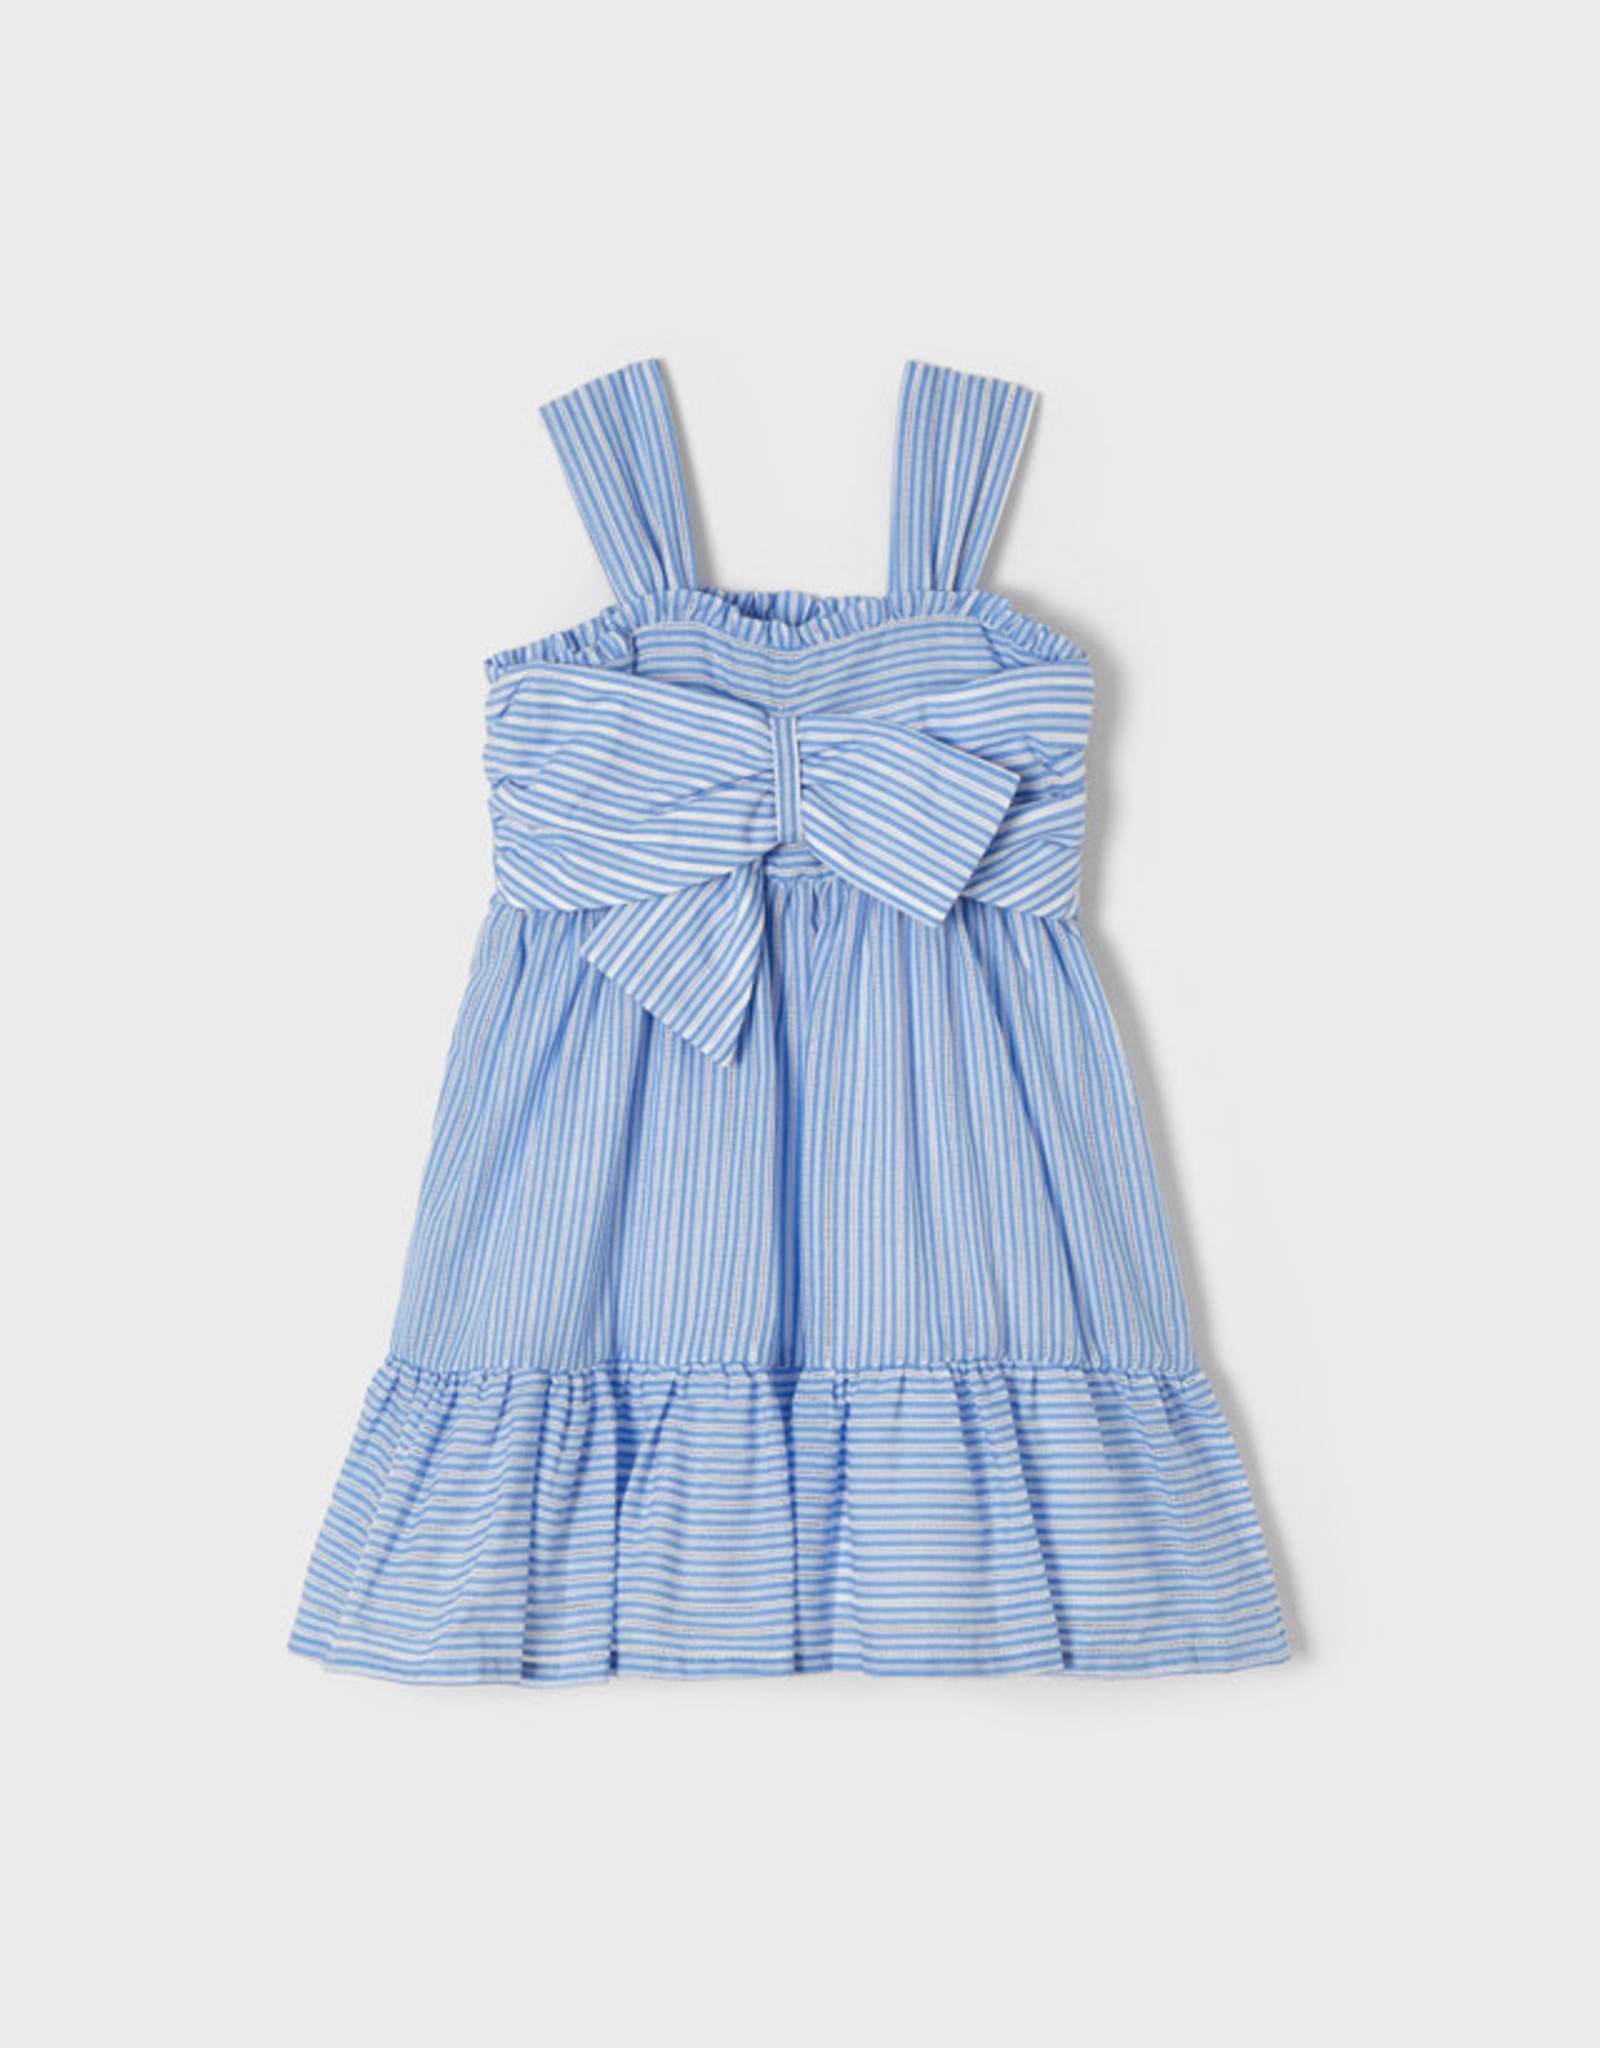 Capri Bow Striped Dress